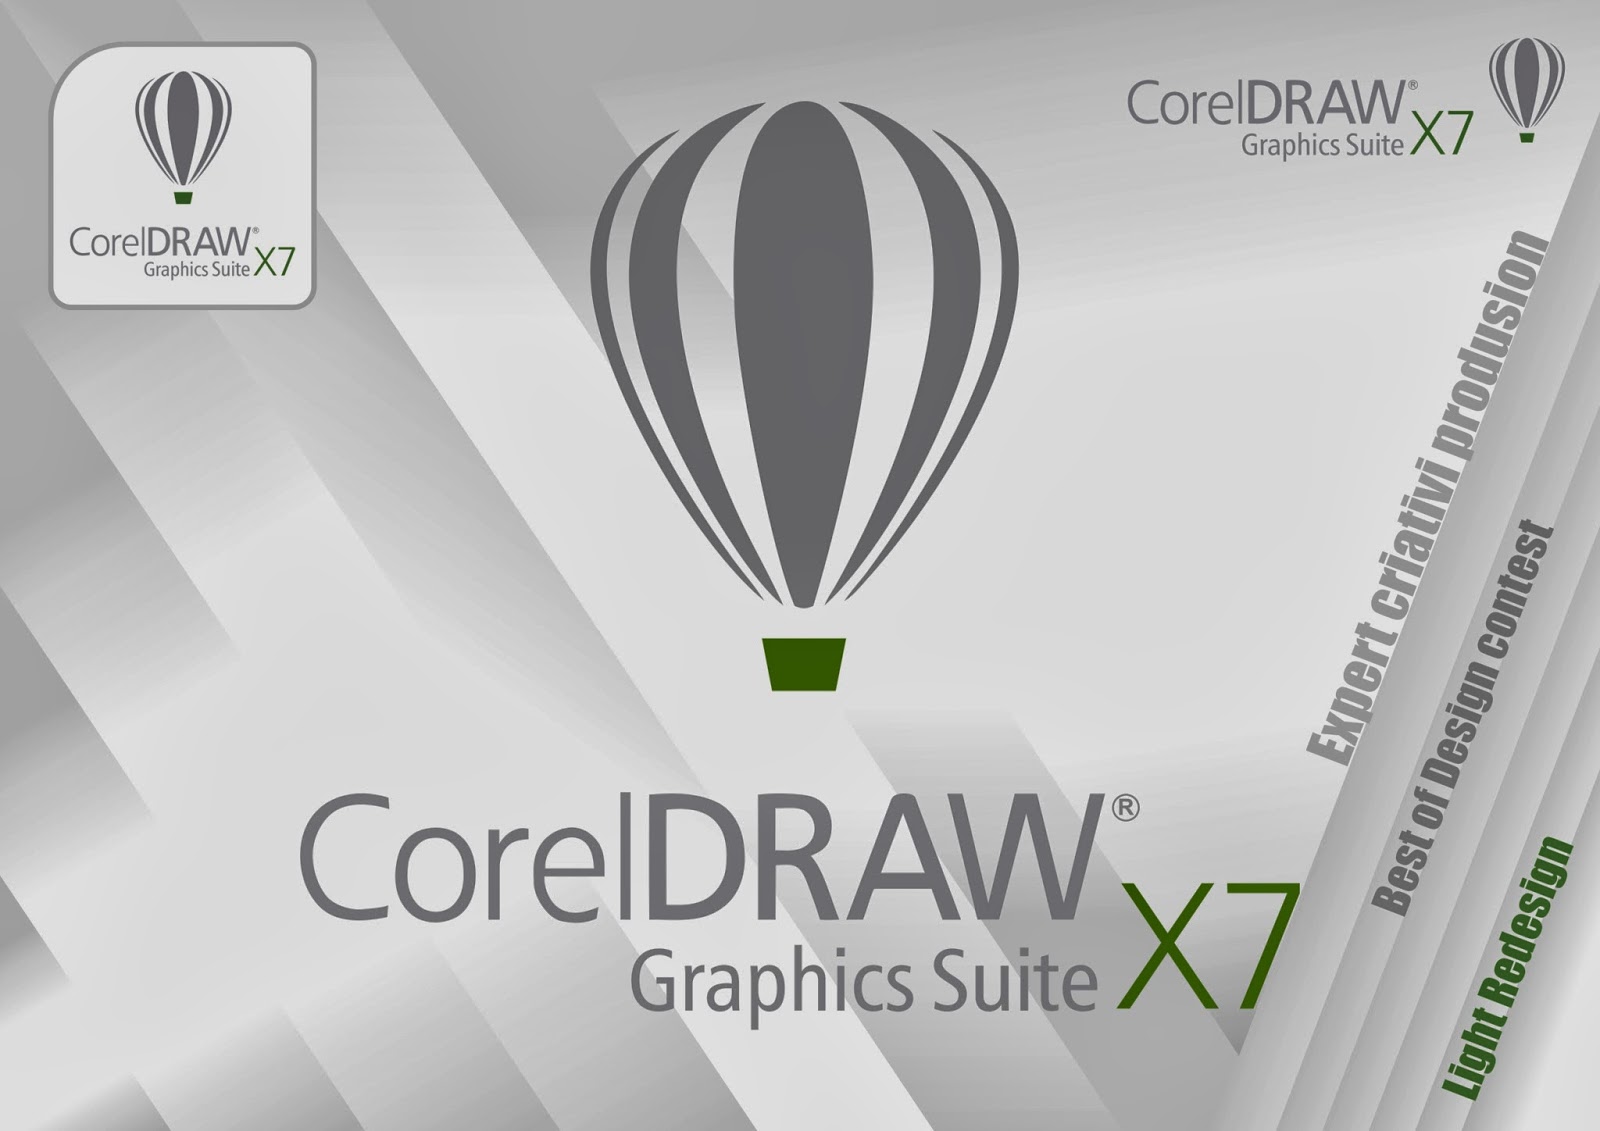 Download Corel Draw X7